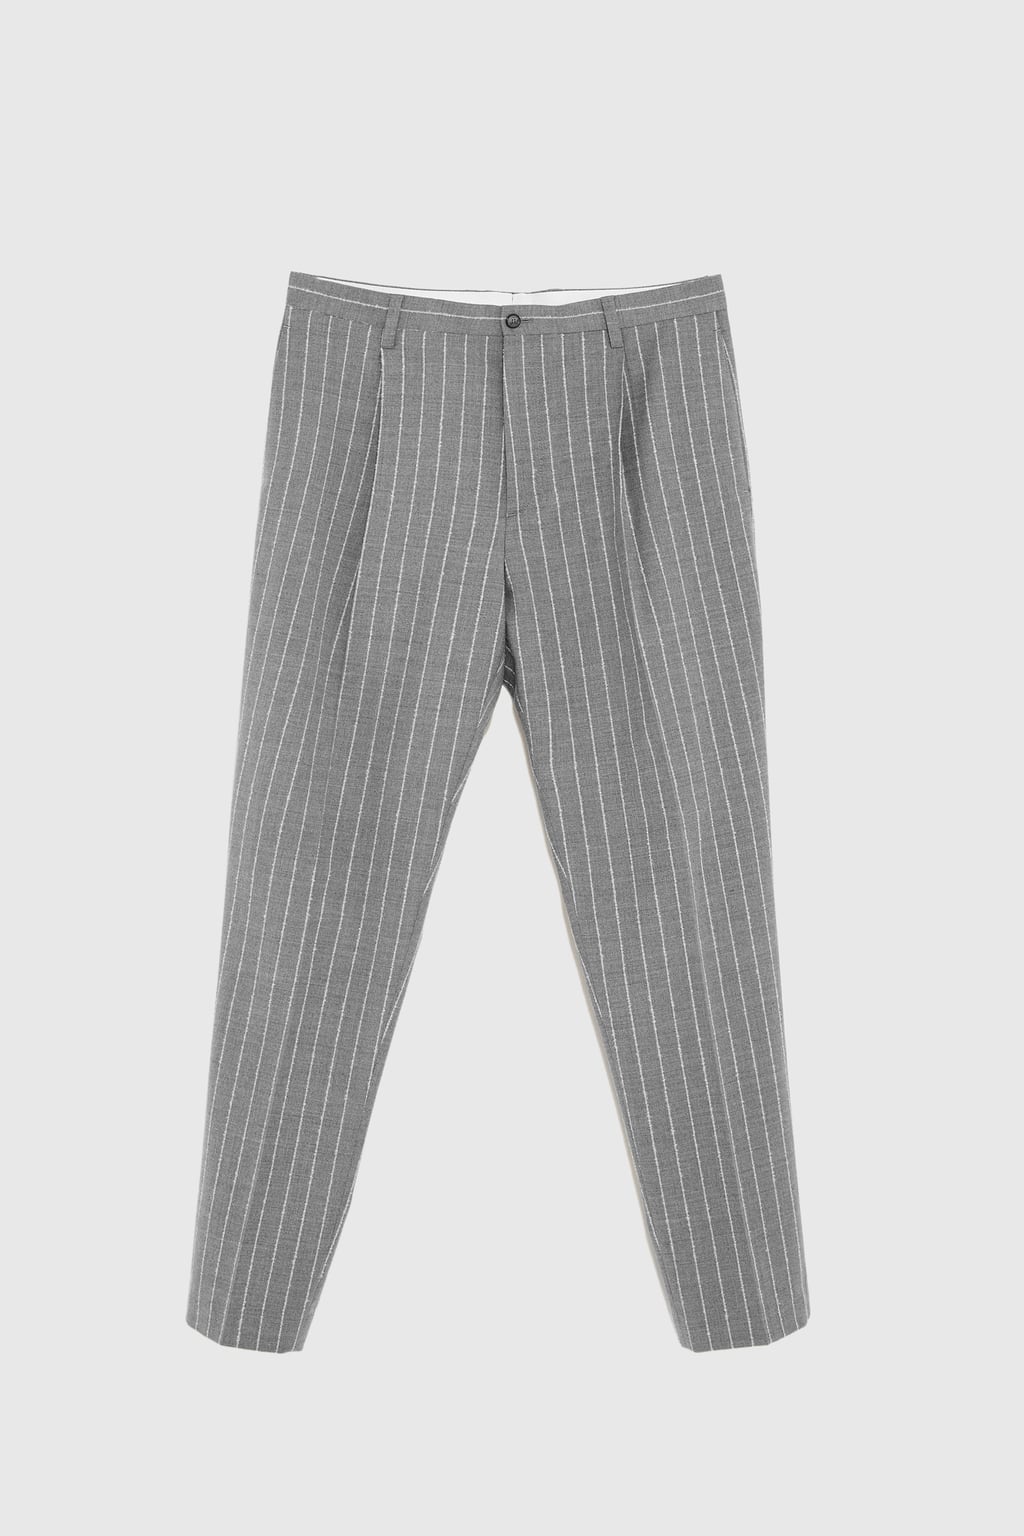 Zara Grey Pinstripe Trousers